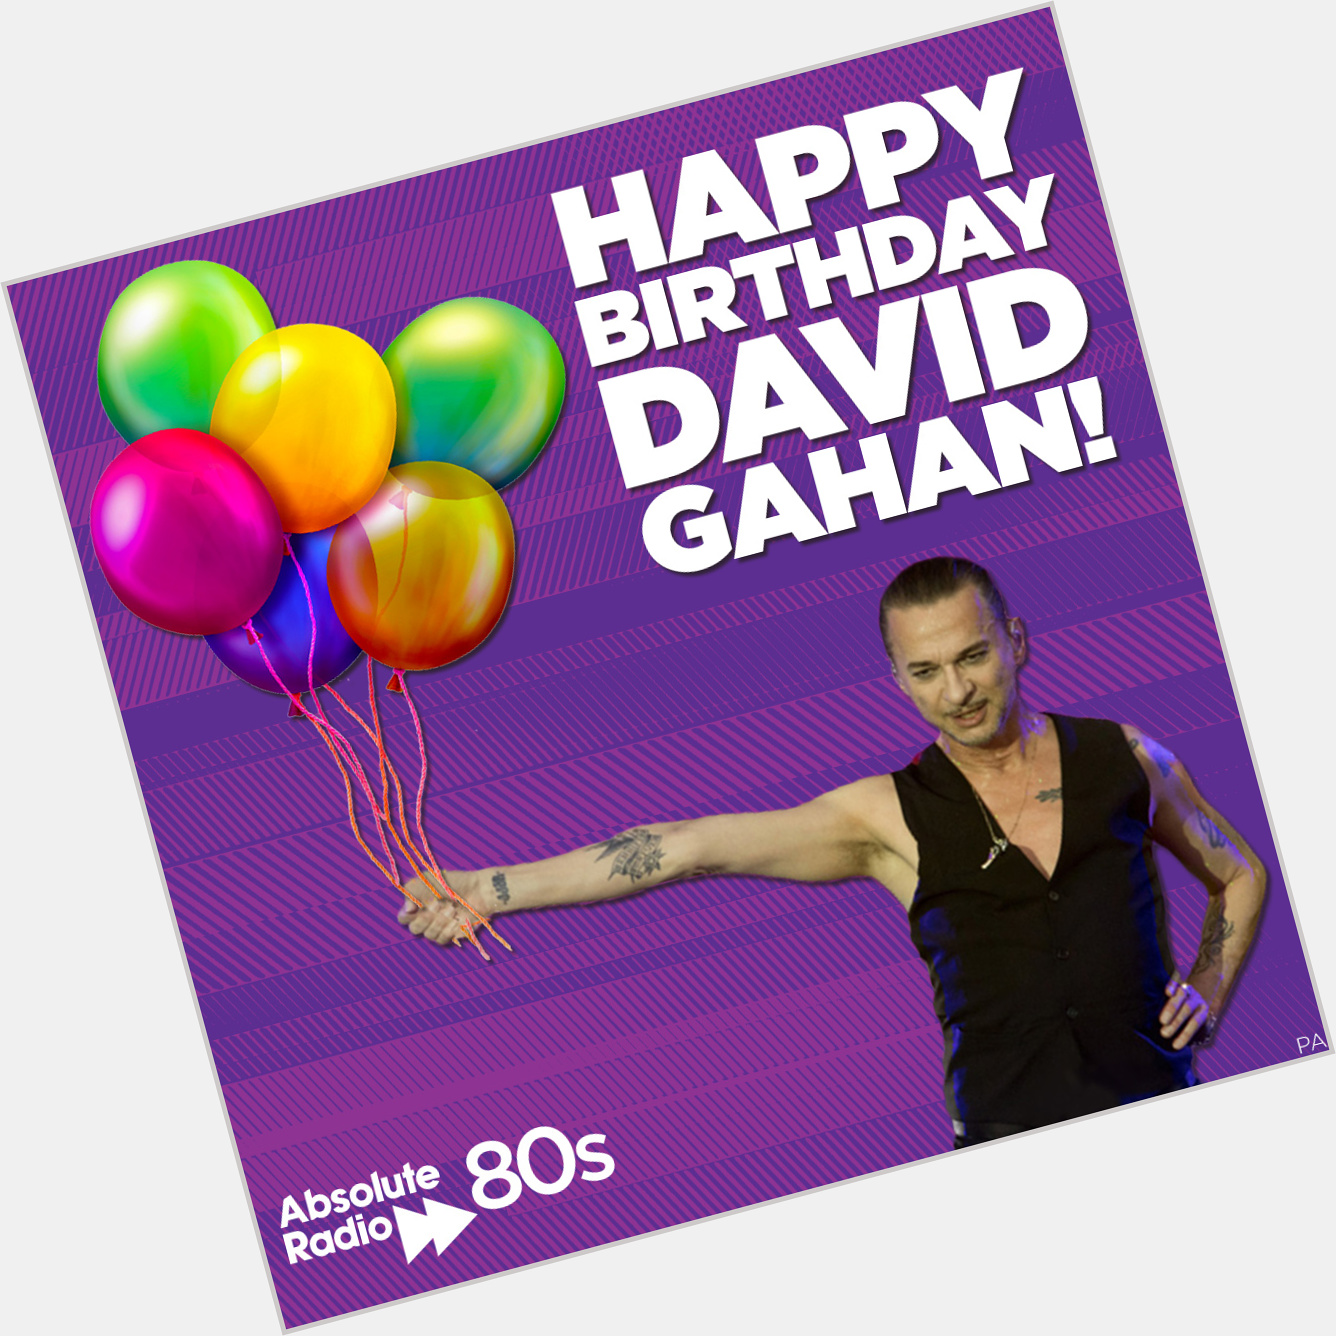 Happy birthday to David Gahan! Leave a birthday message below! 